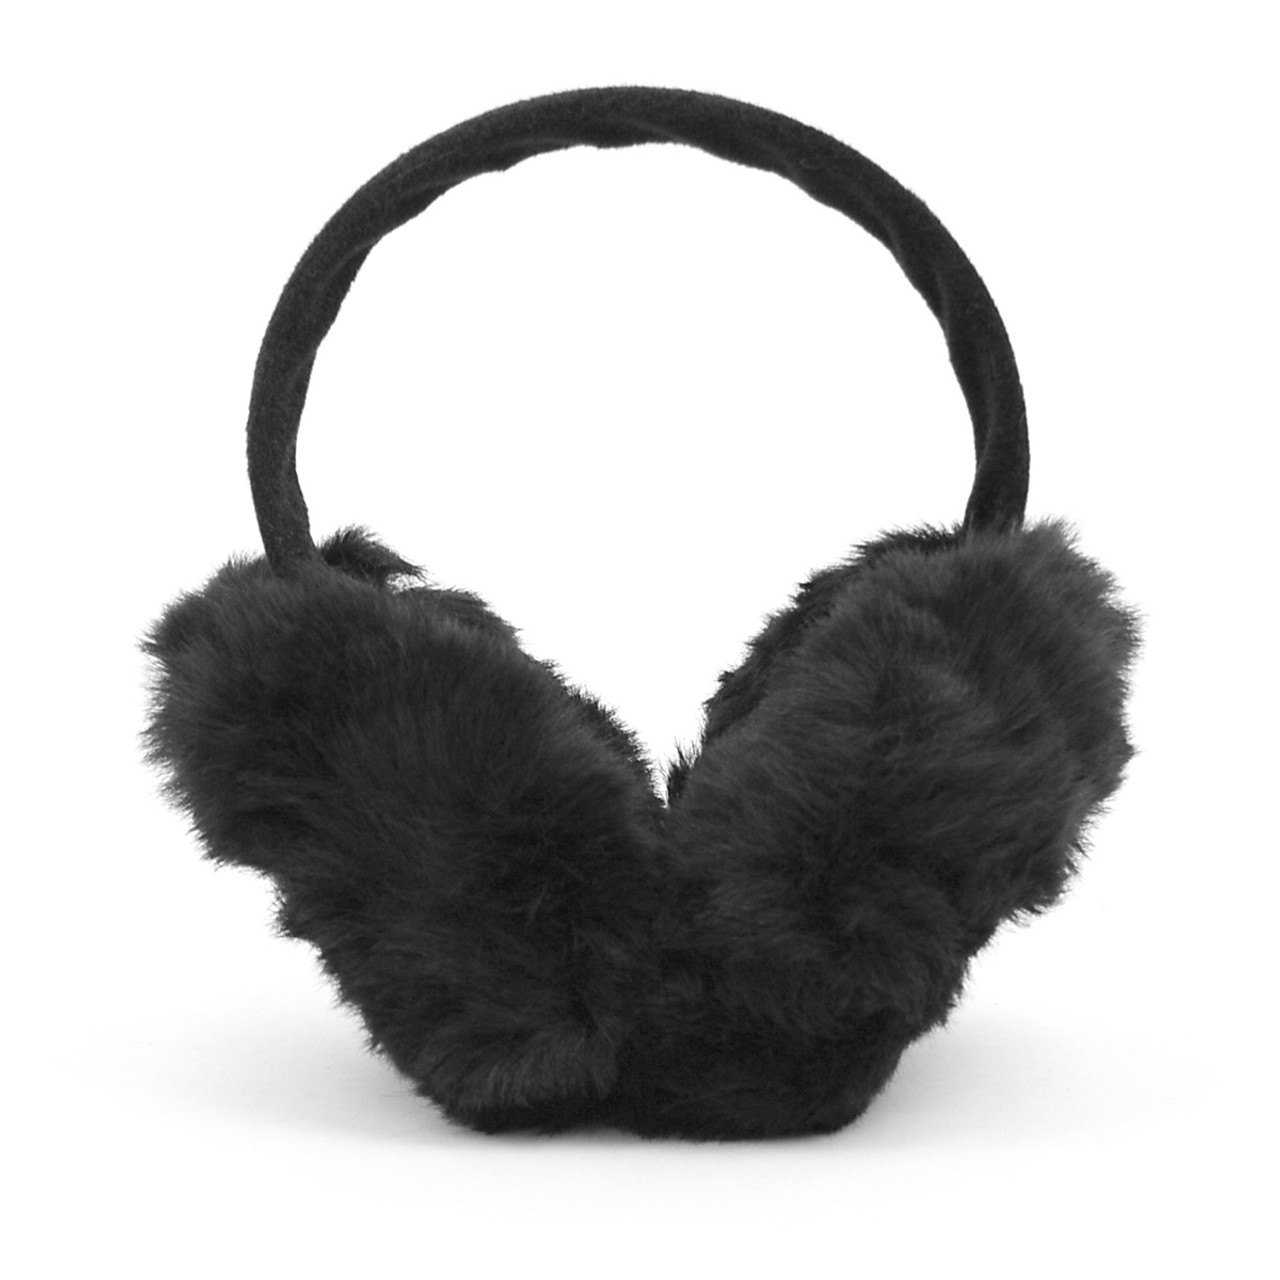 Soft & Fuzzy Black Fur 'Over the Head' Ear Muffs - EM1214